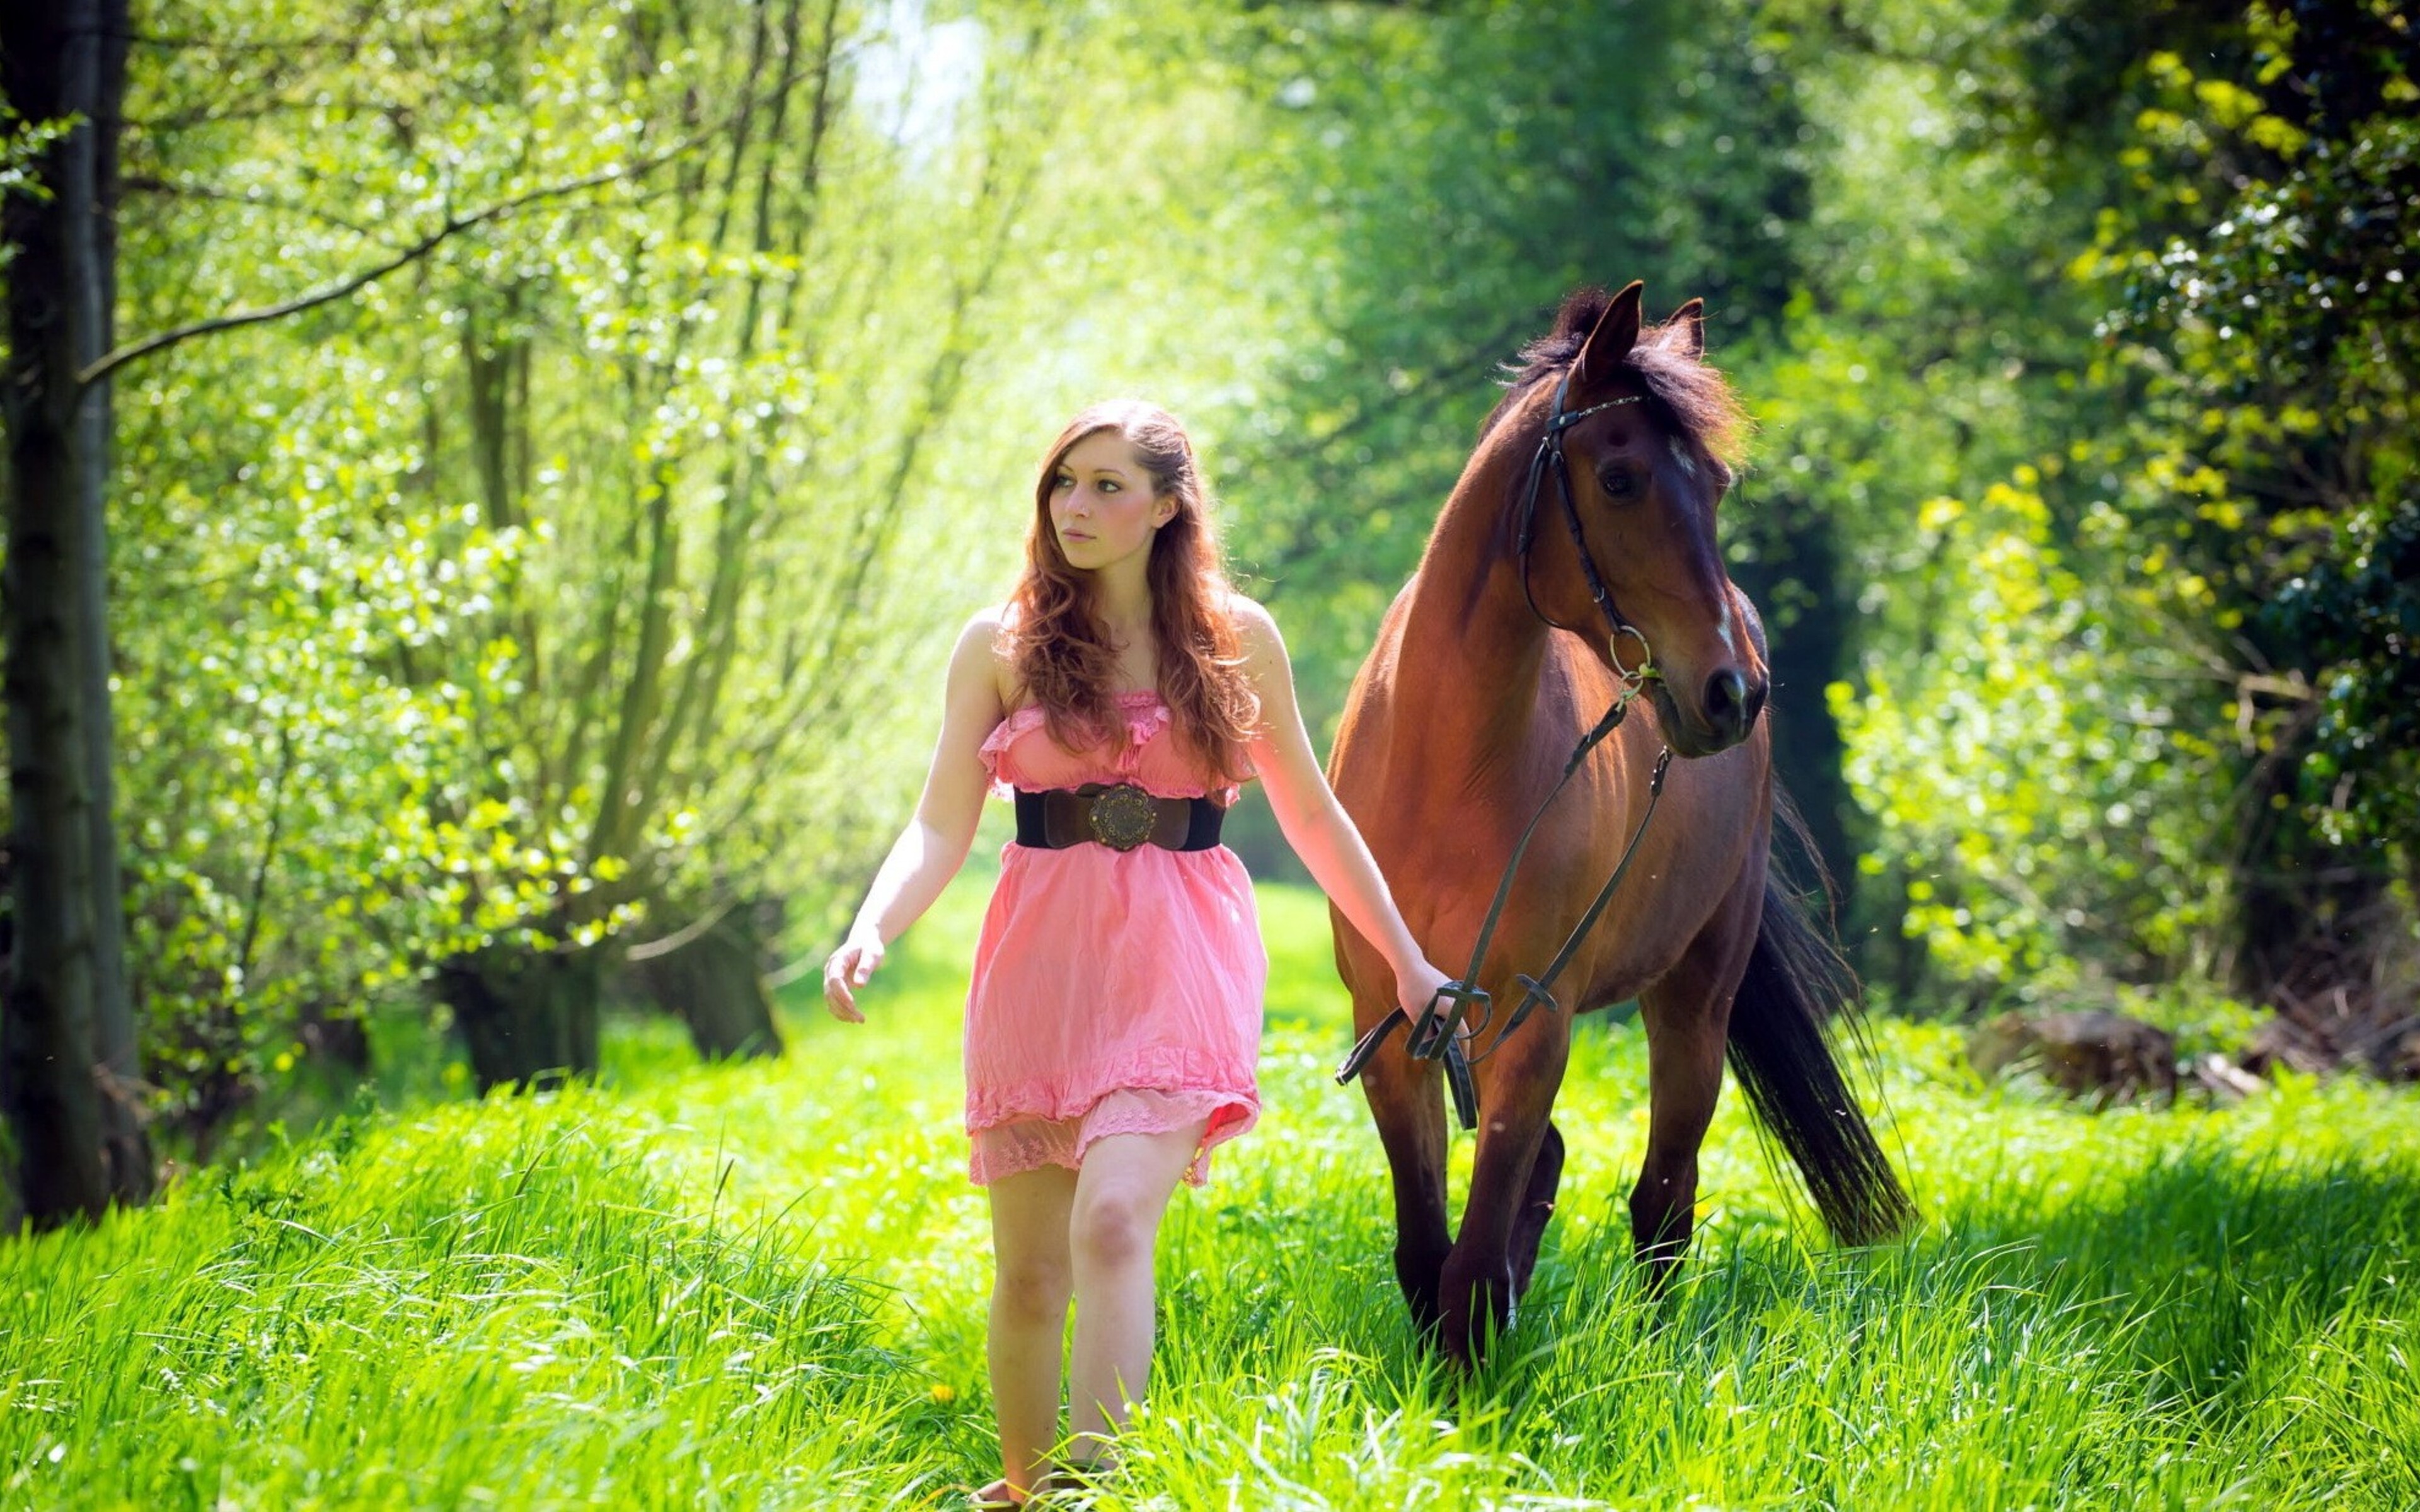 Лошадку ведет. Фотосессия с лошадьми на природе. Красивые девушки на природе. Девушка с лошадью. Две девушки на лошадях.